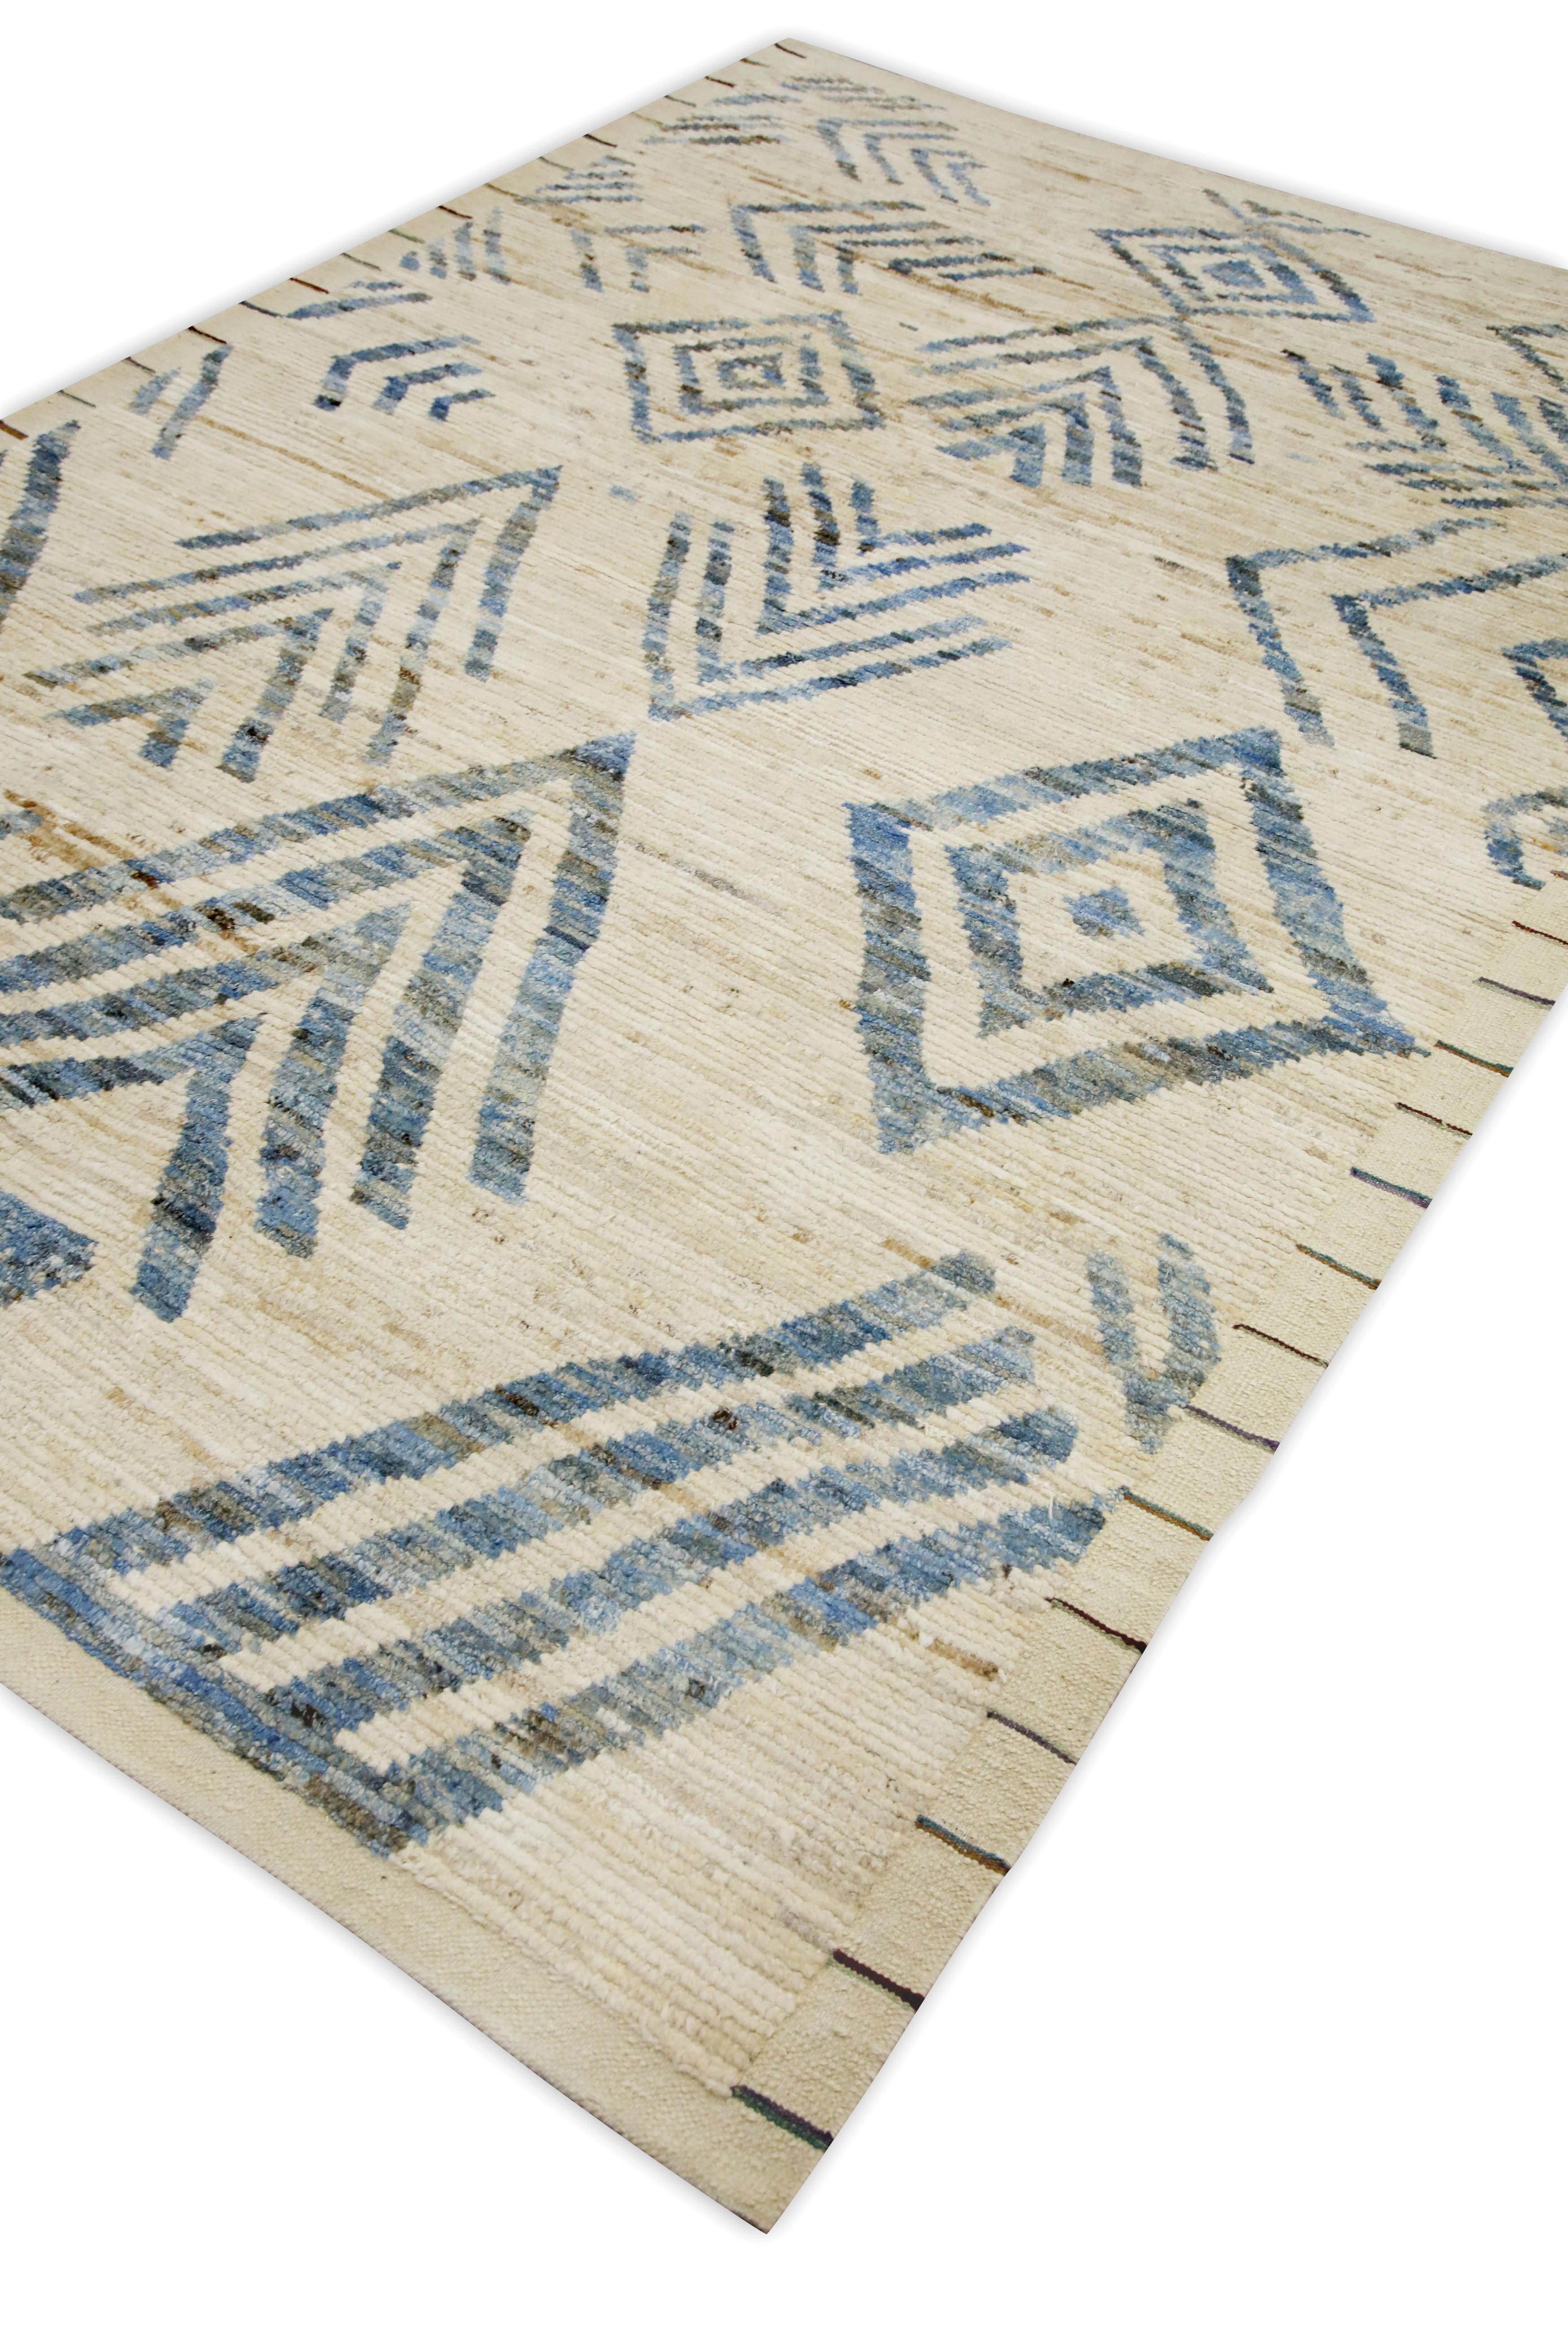 Contemporary Beige & Blue Handmade Wool Modern Turkish Rug in Geometric Design 6'4